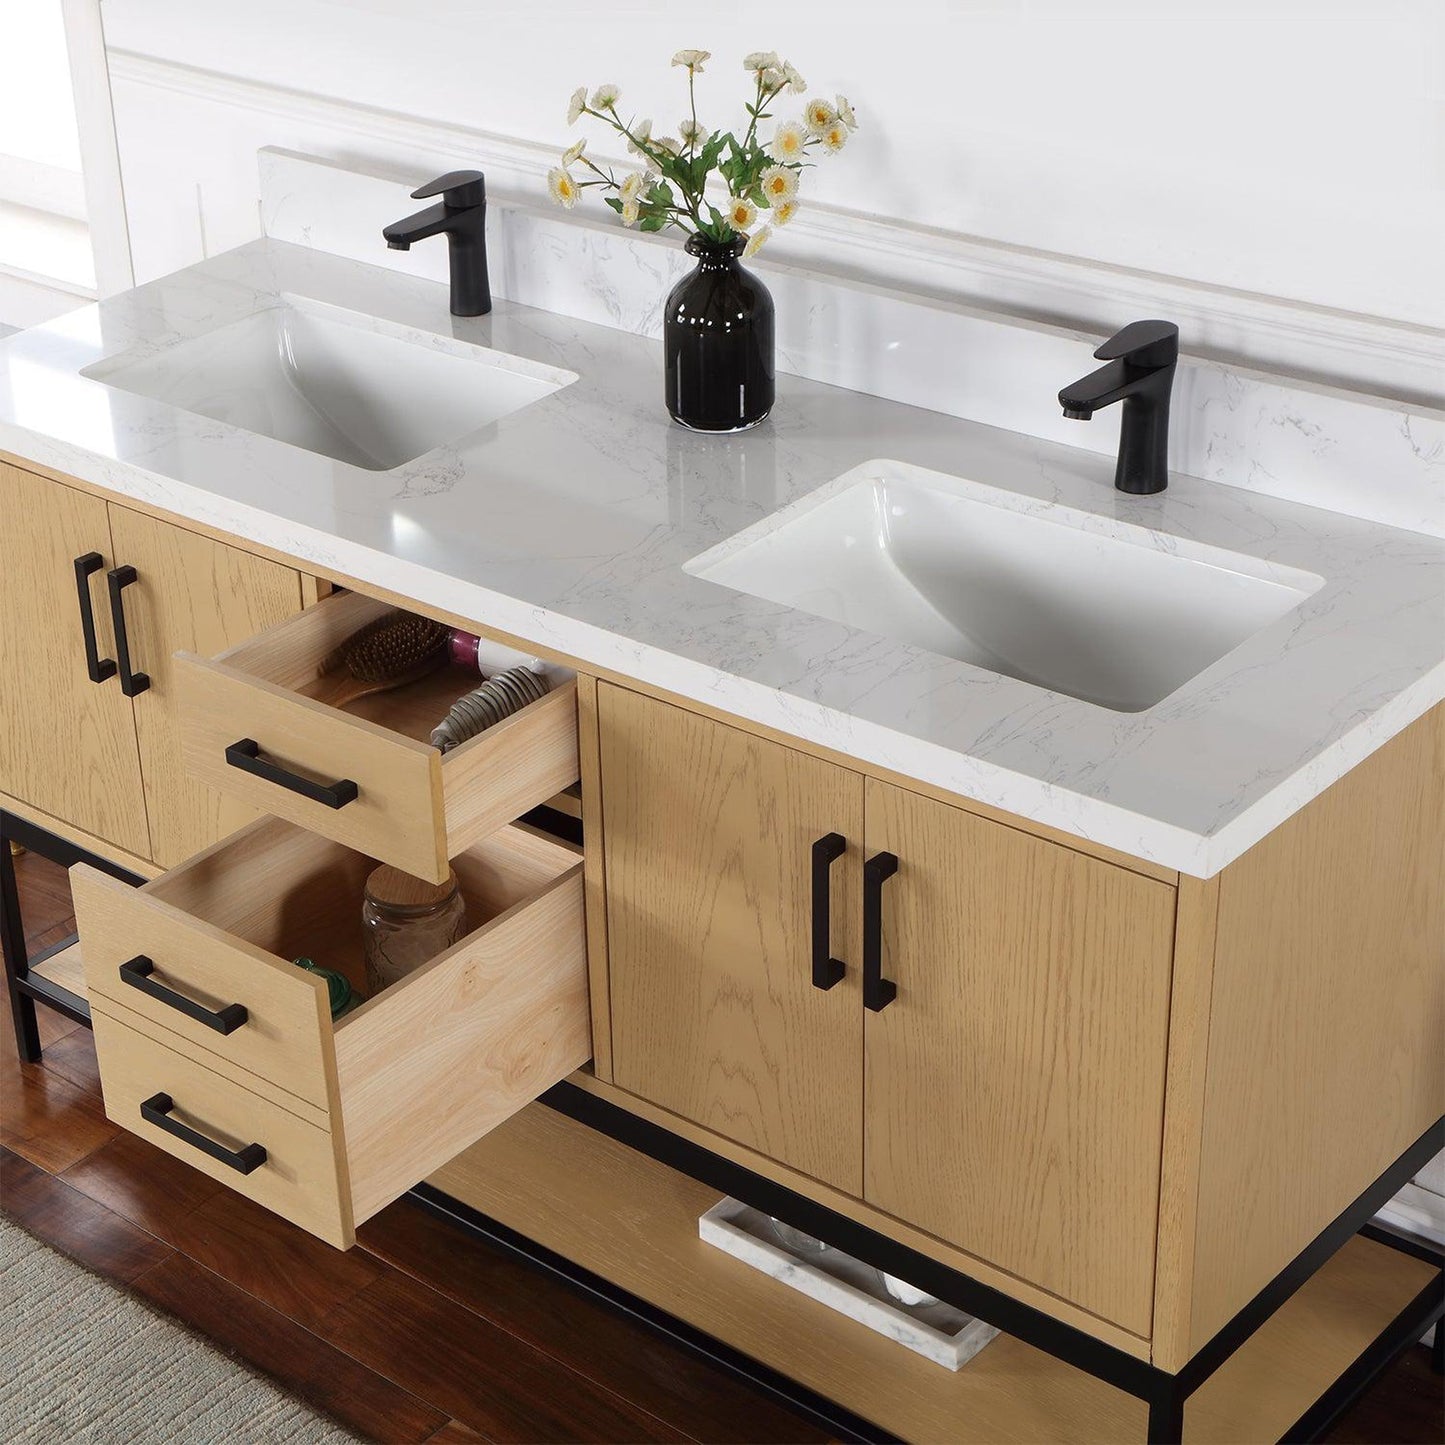 Altair Wildy 60" Washed Oak Freestanding Single Bathroom Vanity Set With Stylish Composite Grain White Stone Top, Rectangular Undermount Ceramic Sink, Overflow, and Backsplash